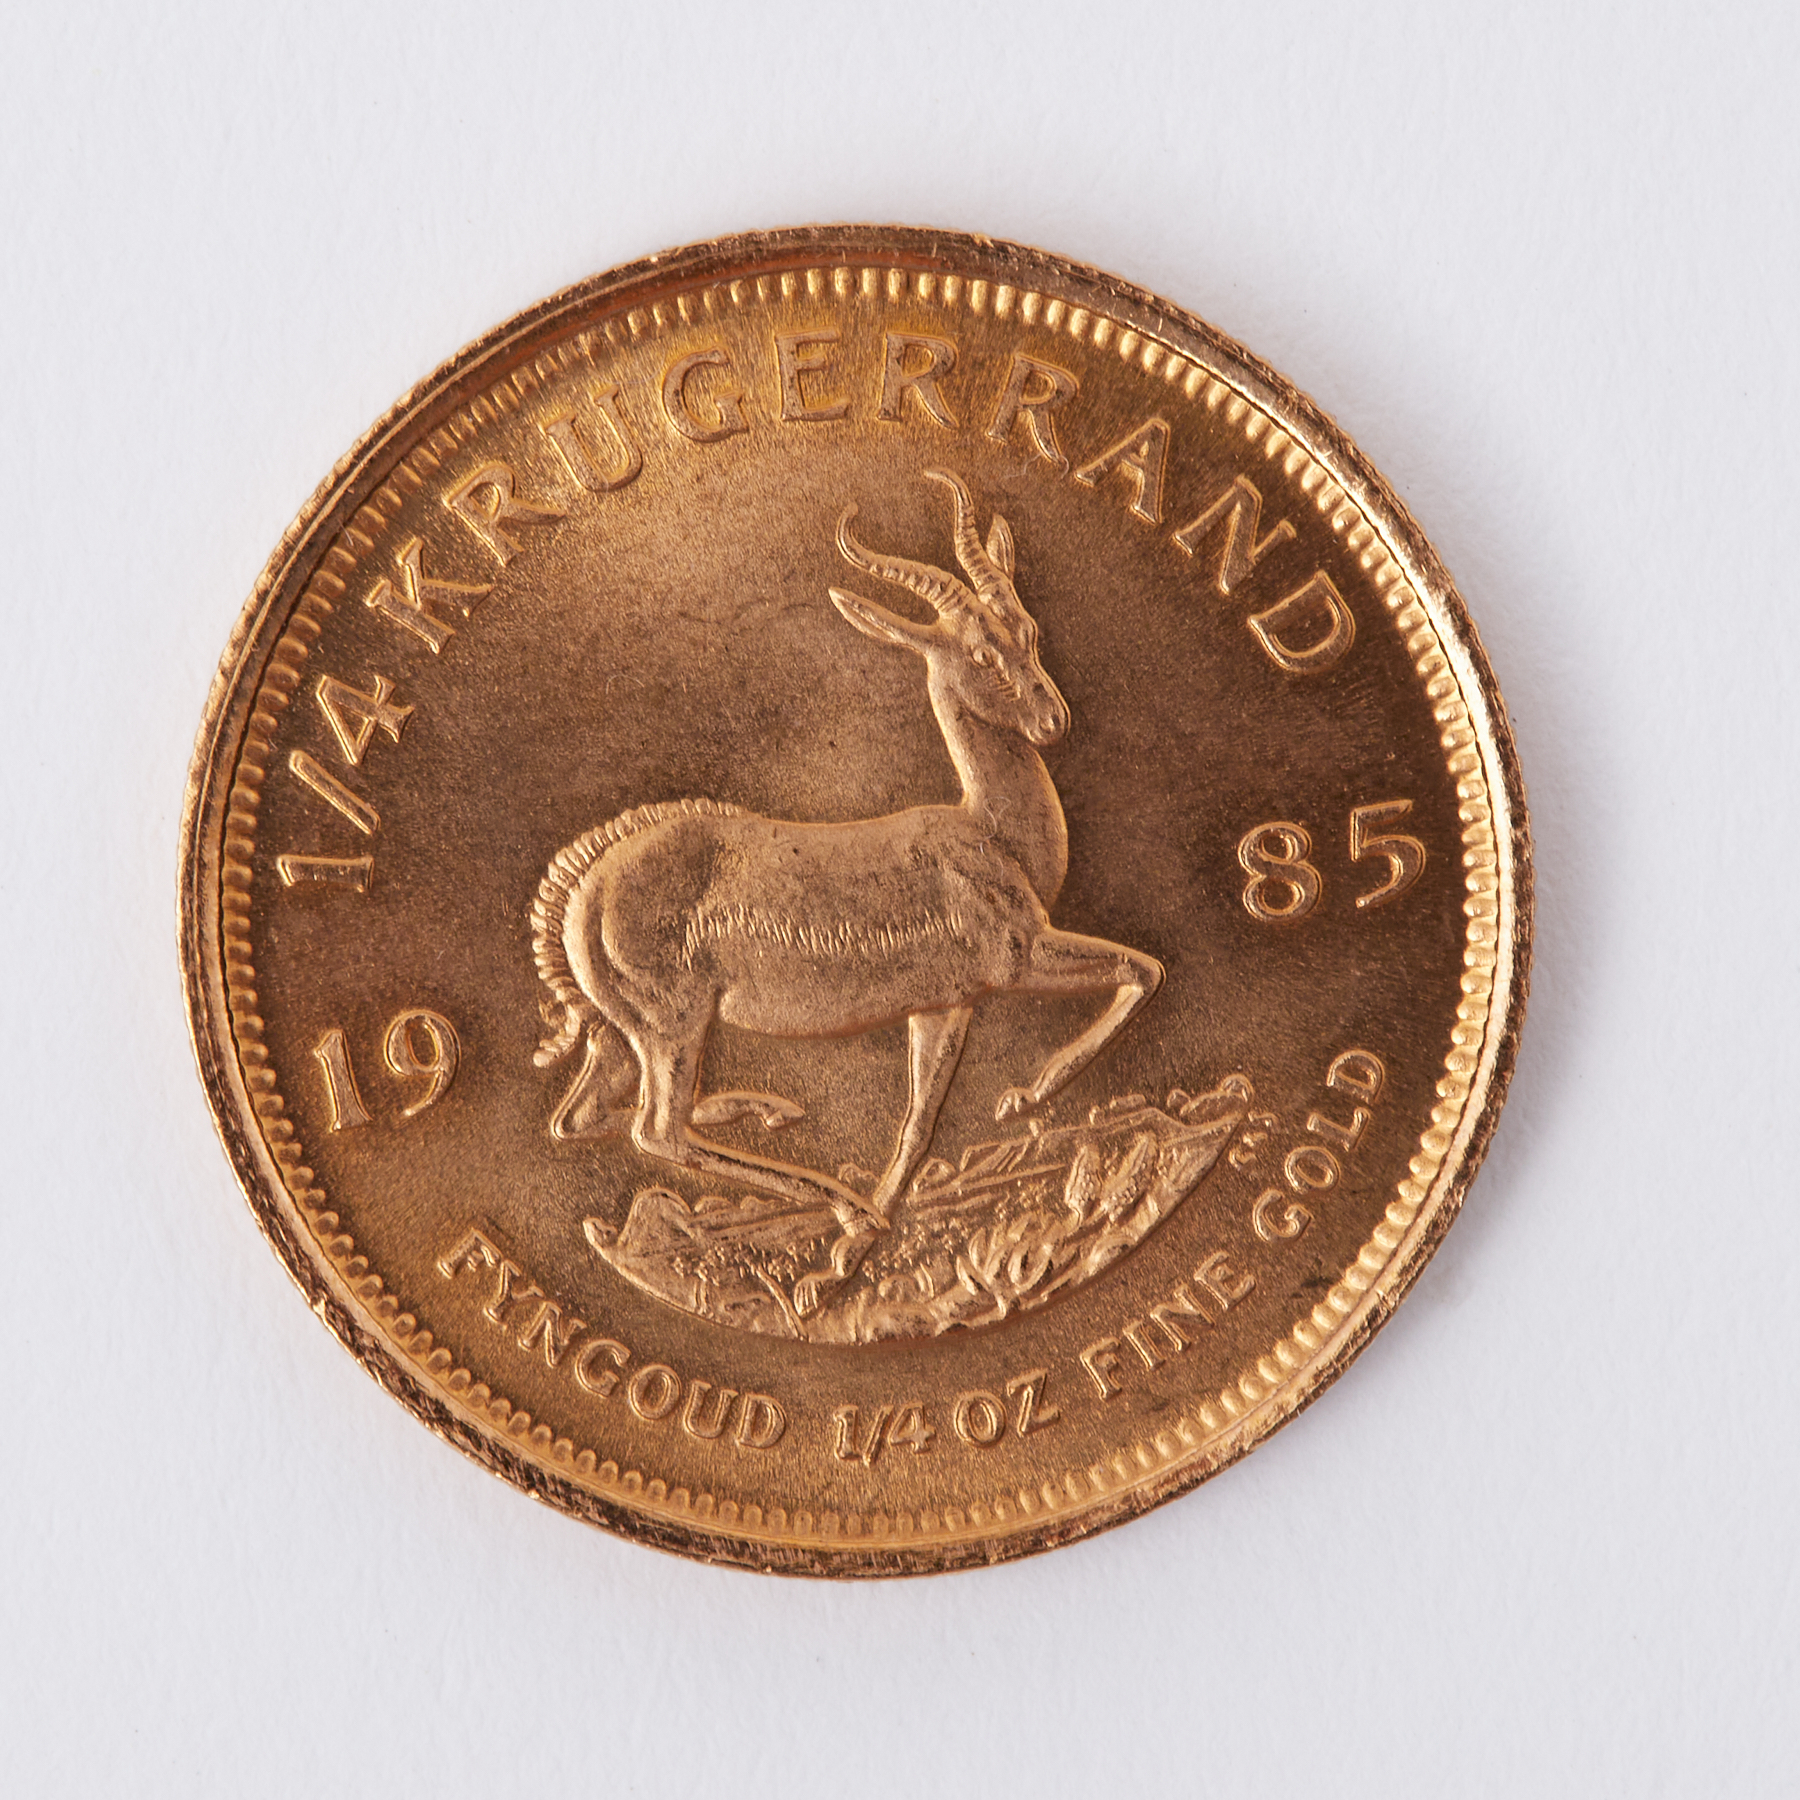 A quarter ounce Krugerrand gold coin 1985.